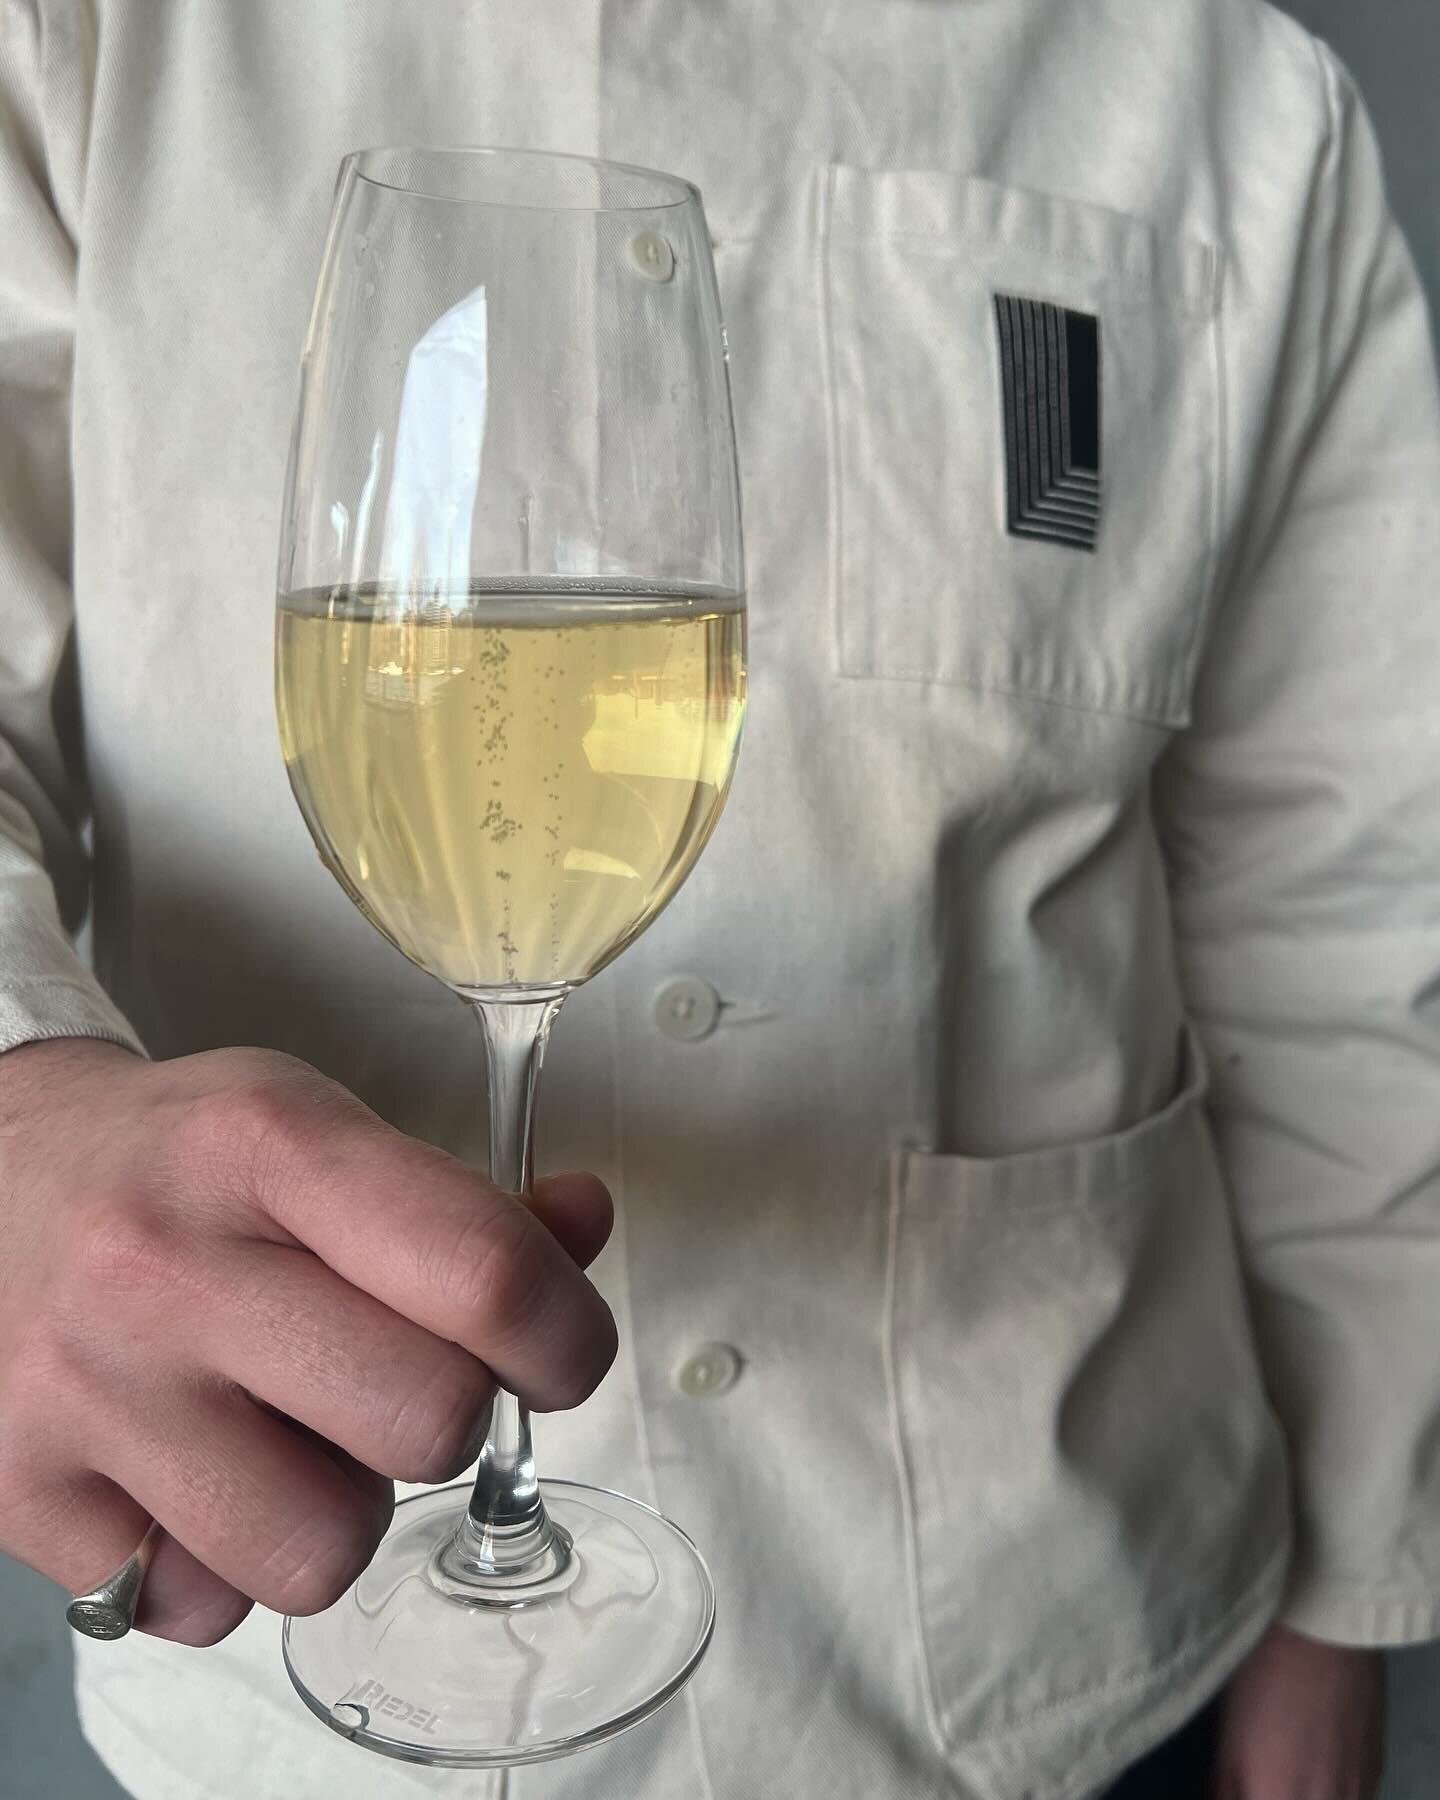 Davenport Vineyards, 'Sparkling Auxerrois', Sussex, England 2018

@limneyfarm 
@lescavesdepyrene 

@jonrotheram 
@tmfharris 
@ogierjohn 
@nationaltheatre